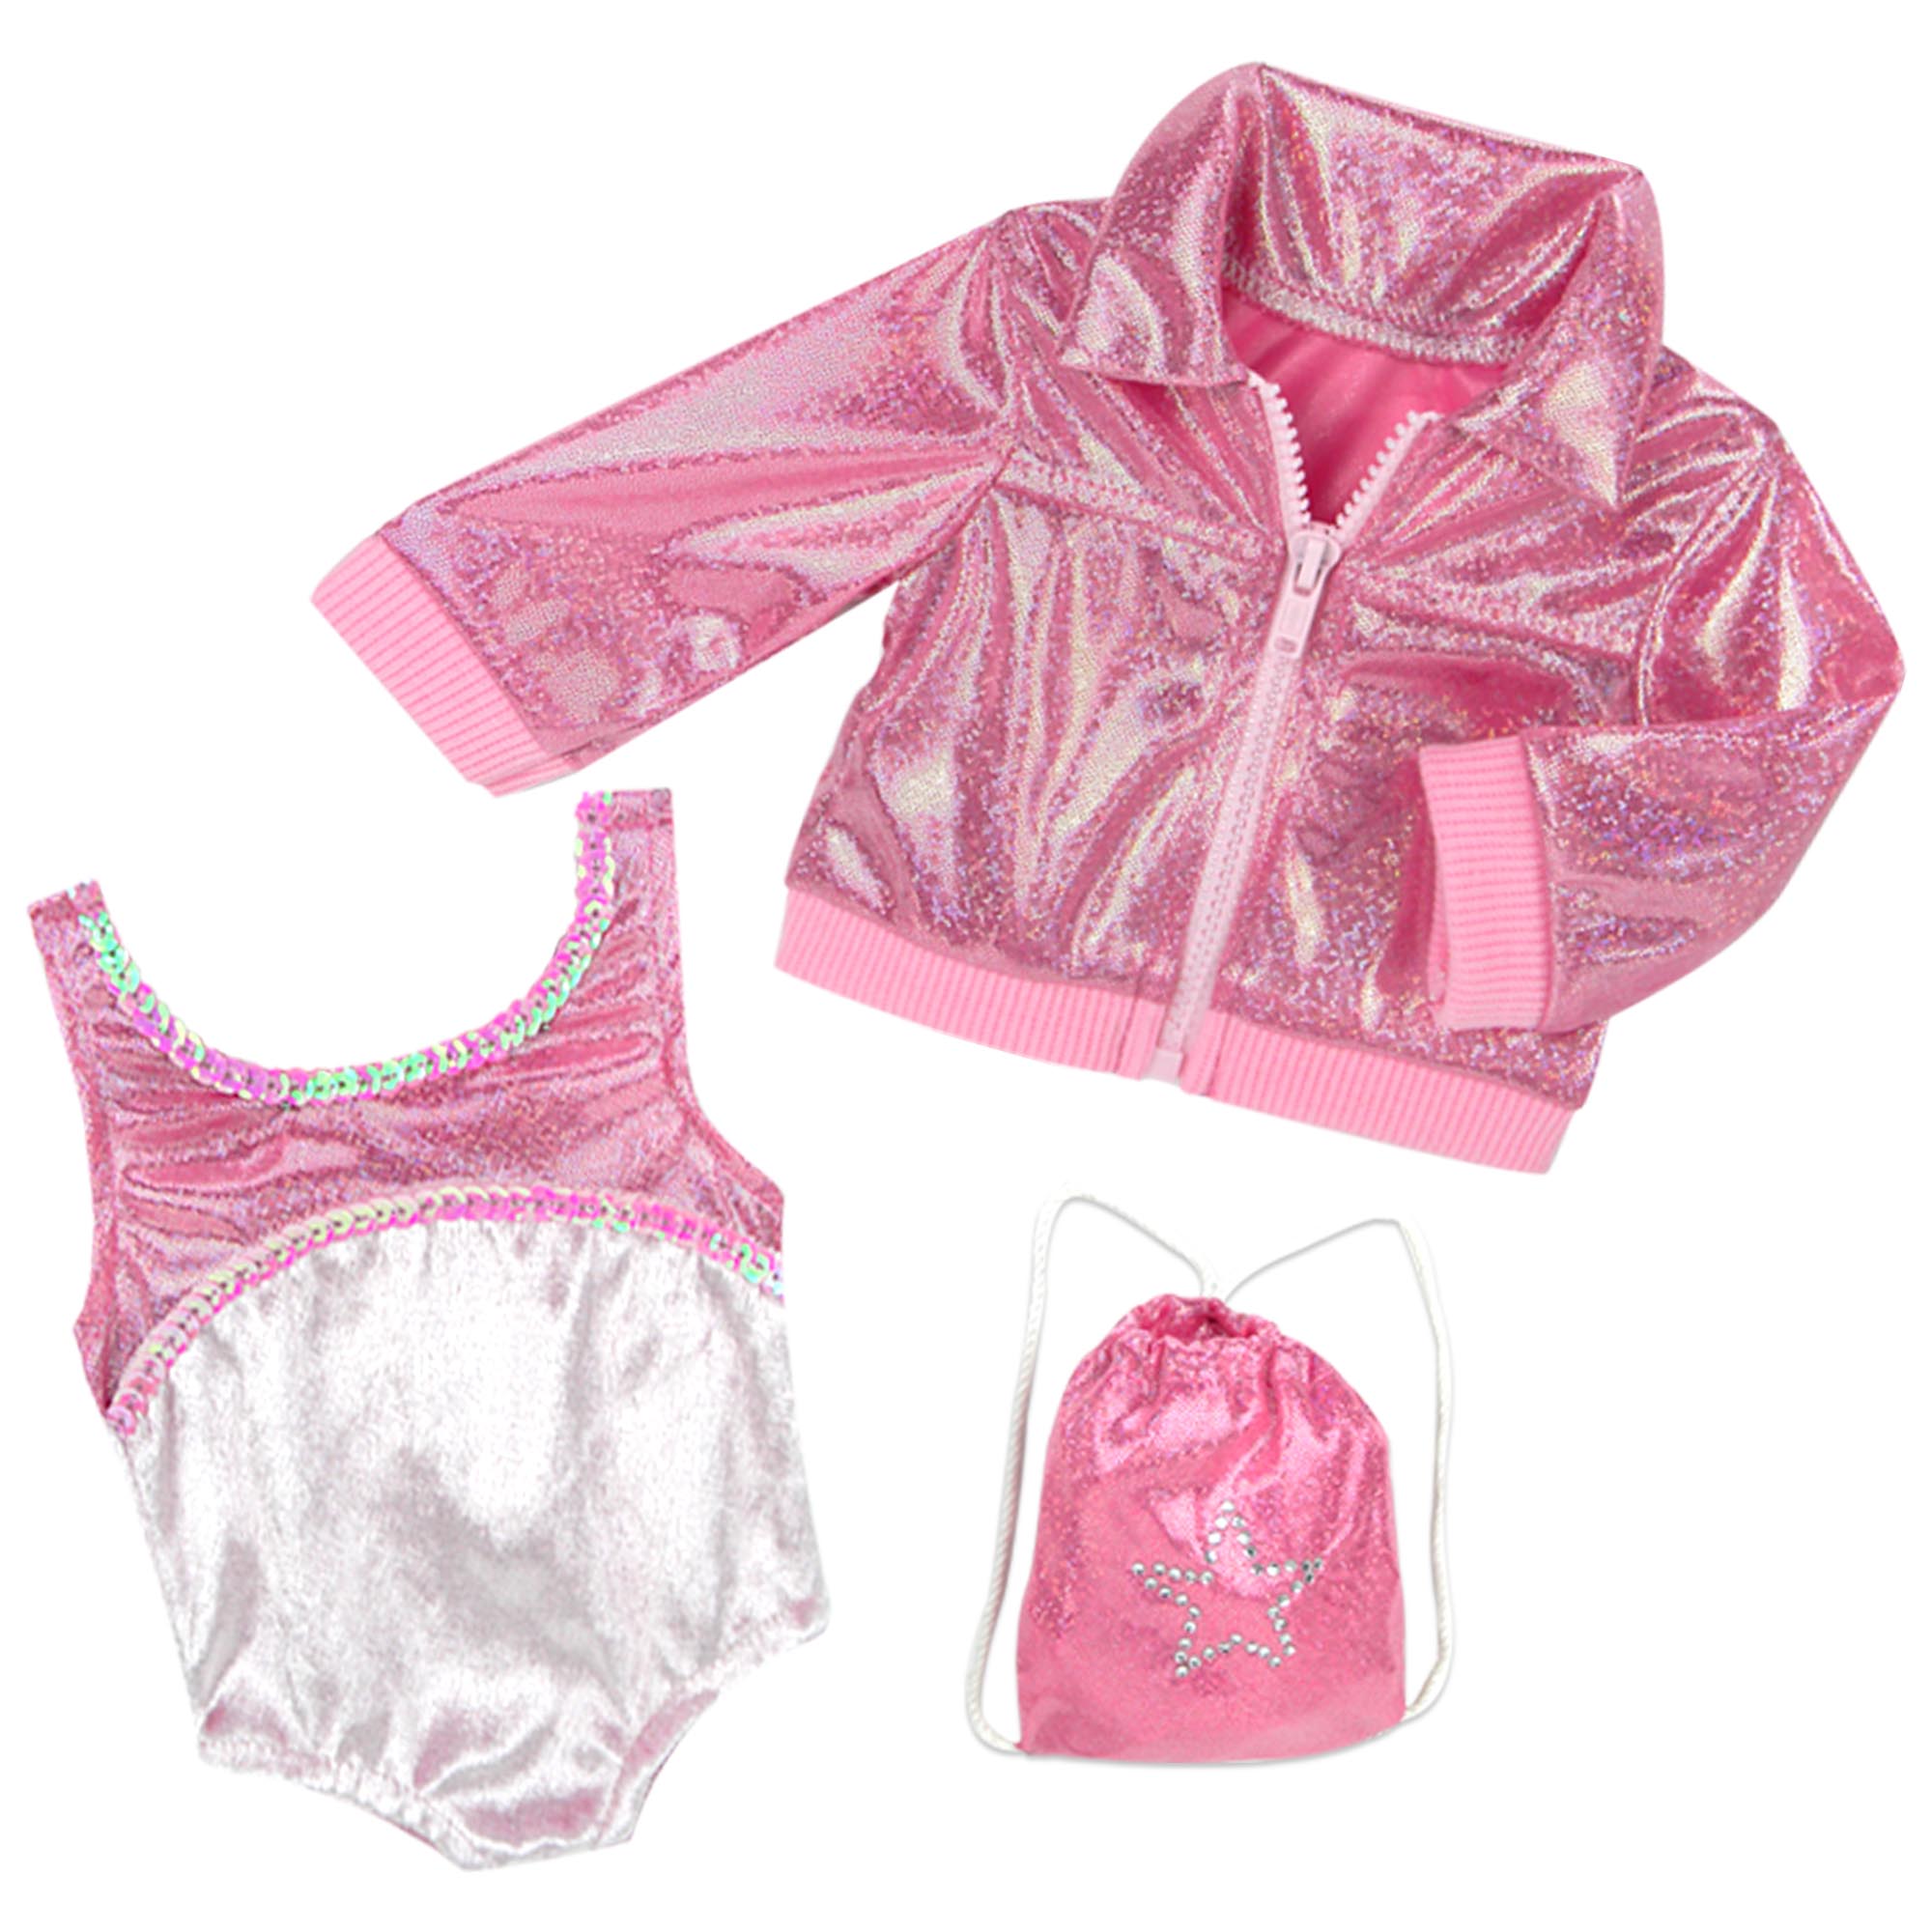 Sophia's Gymnastics Leotard & Nylon Jacket for 18" Dolls, Pink